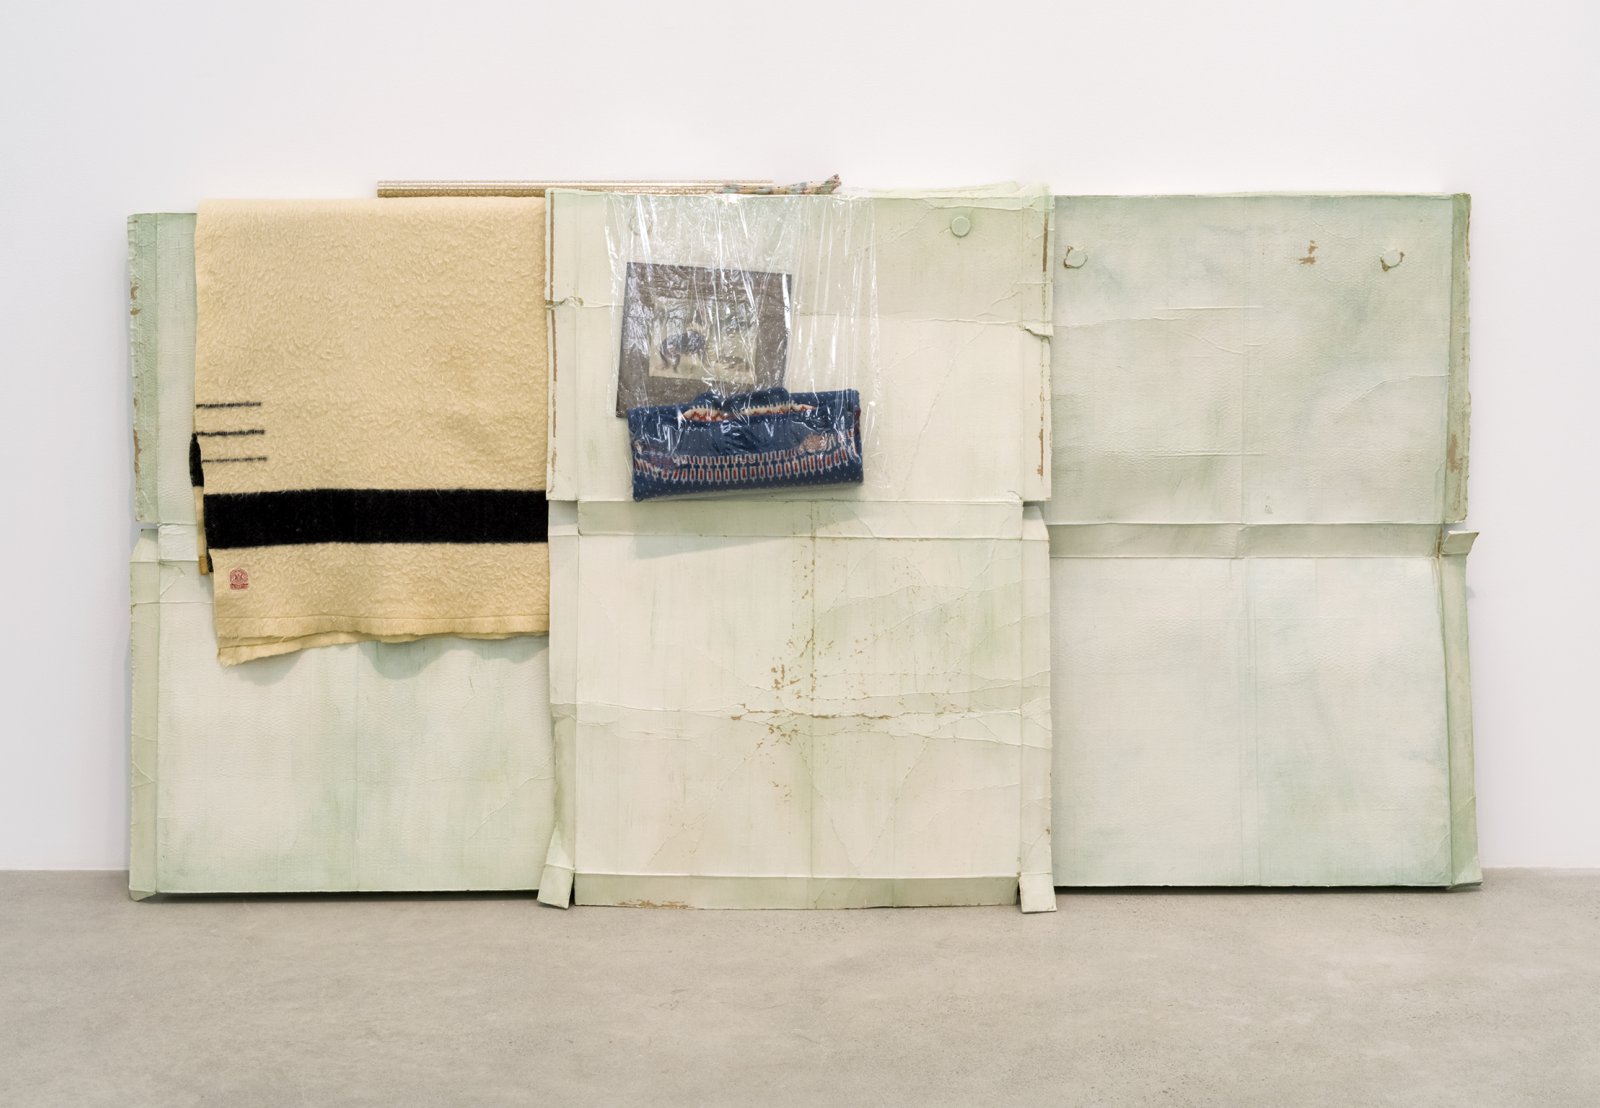 Liz Magor, Good Shepherd, 2016, polymerized gypsum, wool, plastic bags, plastic sheet, cardboard, 53 x 103 x 12 in. (133 x 262 x 31 cm) by Liz Magor